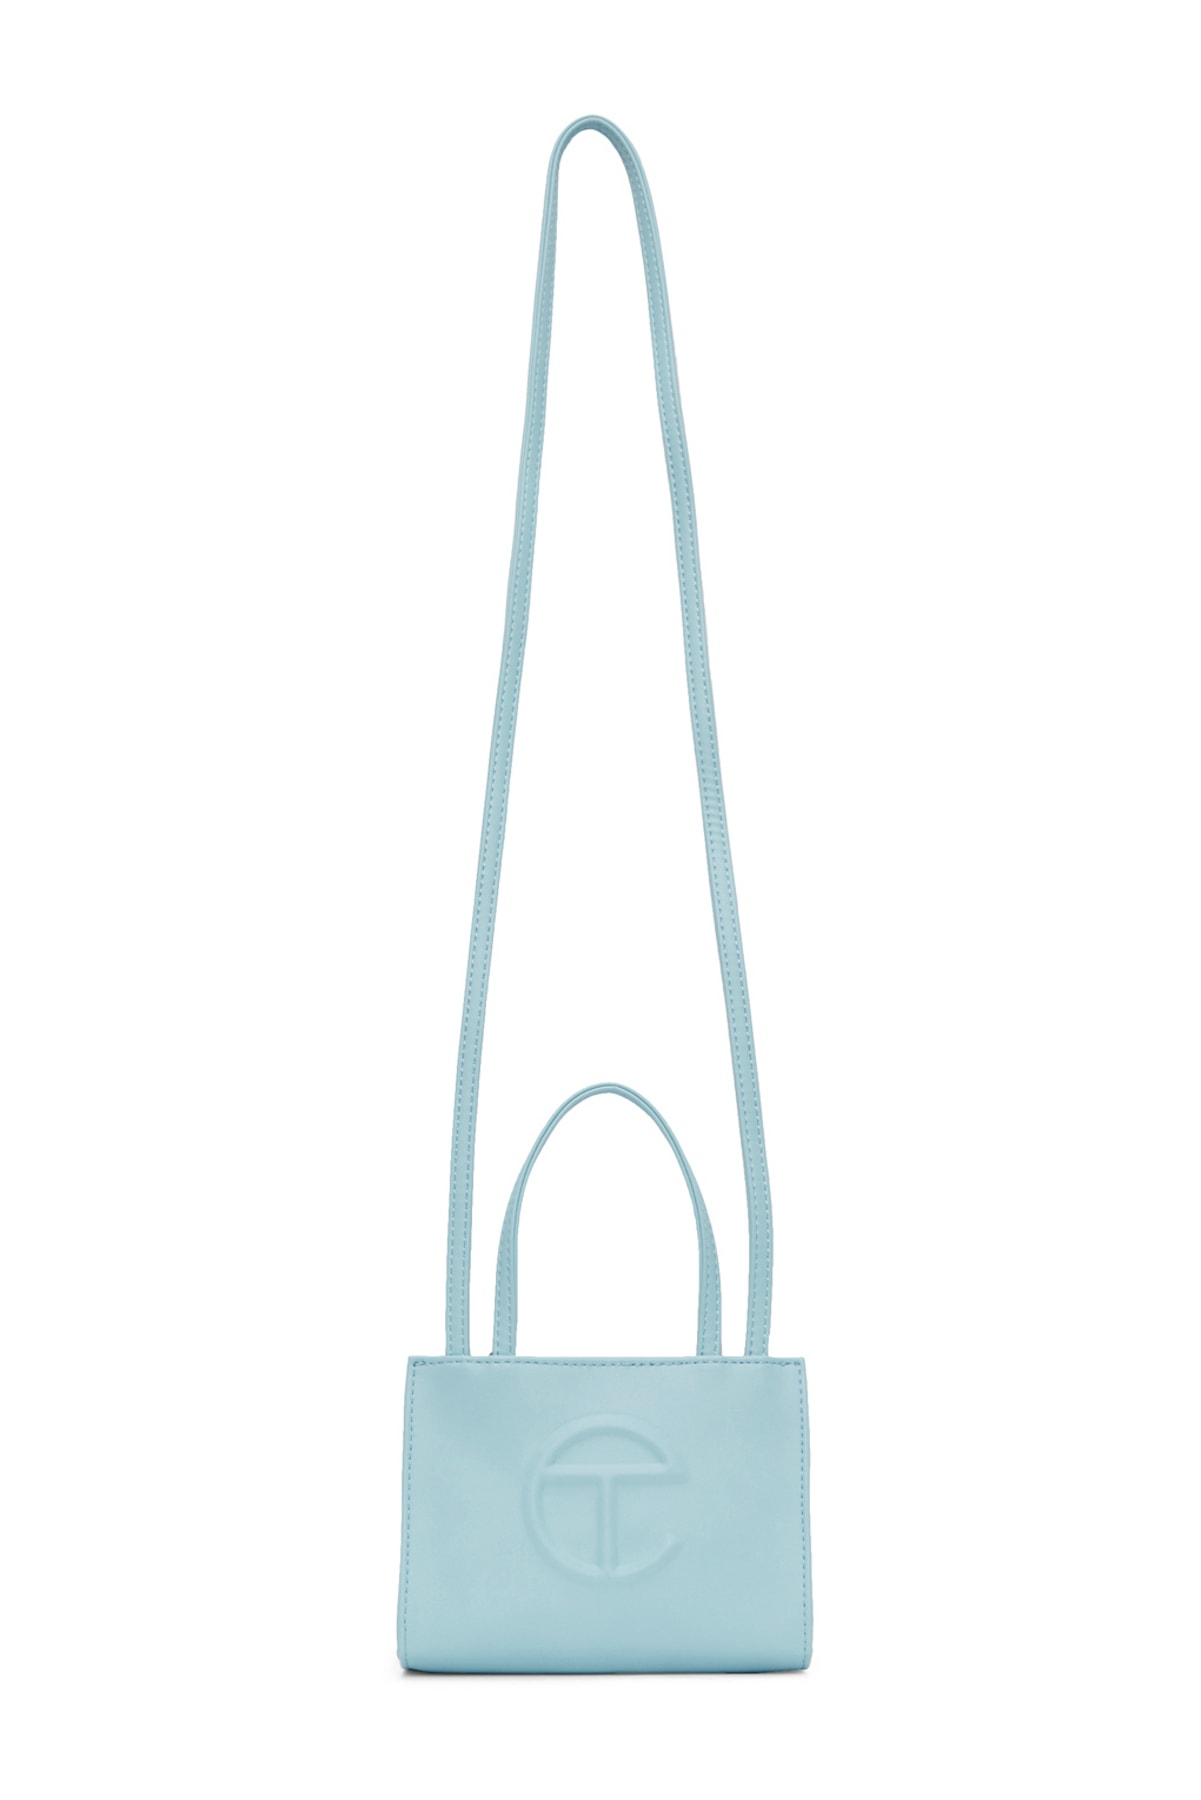 Shop Telfar's Logo Bag in Pastel Pink and Blue | Hypebae